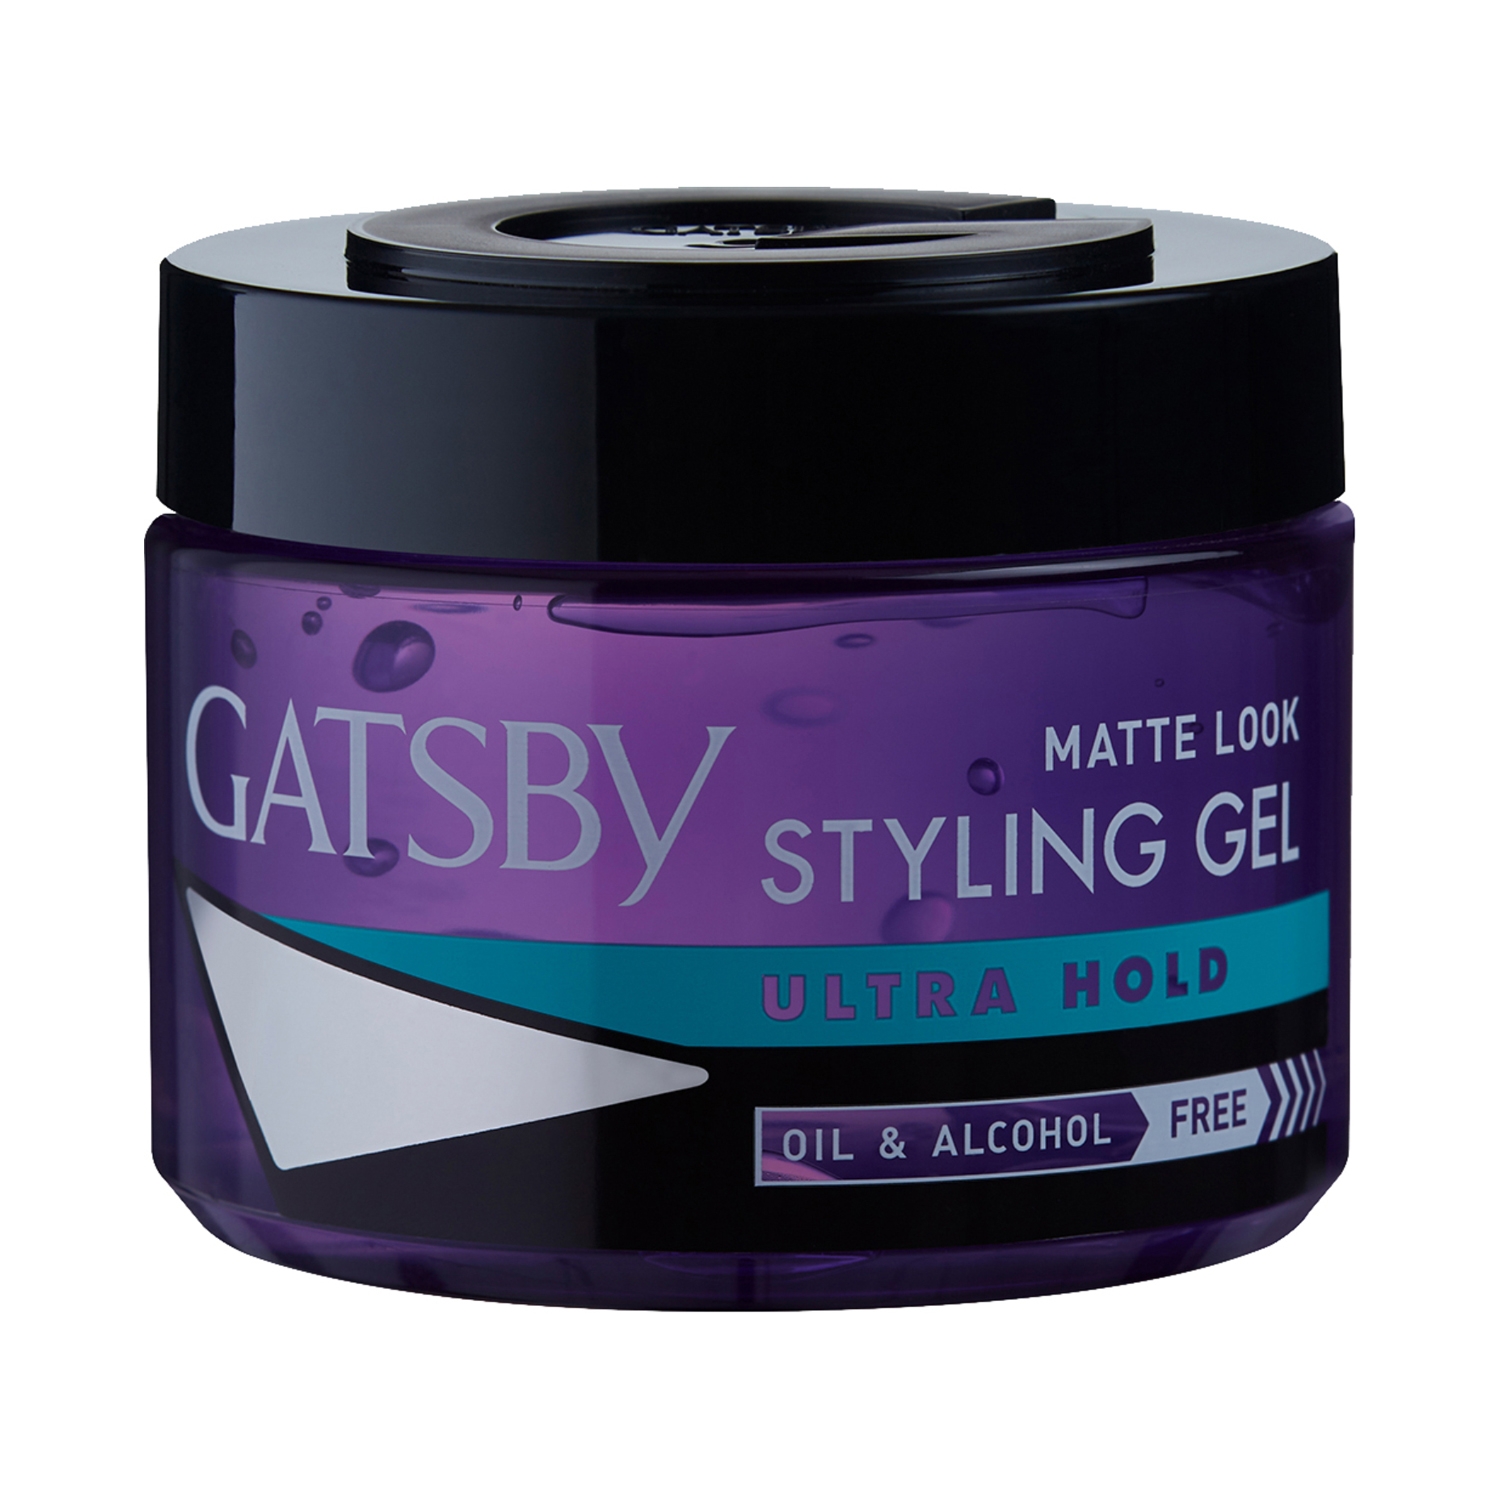 Gatsby | Gatsby Styling Gel Ultra Hold Gel (300g)